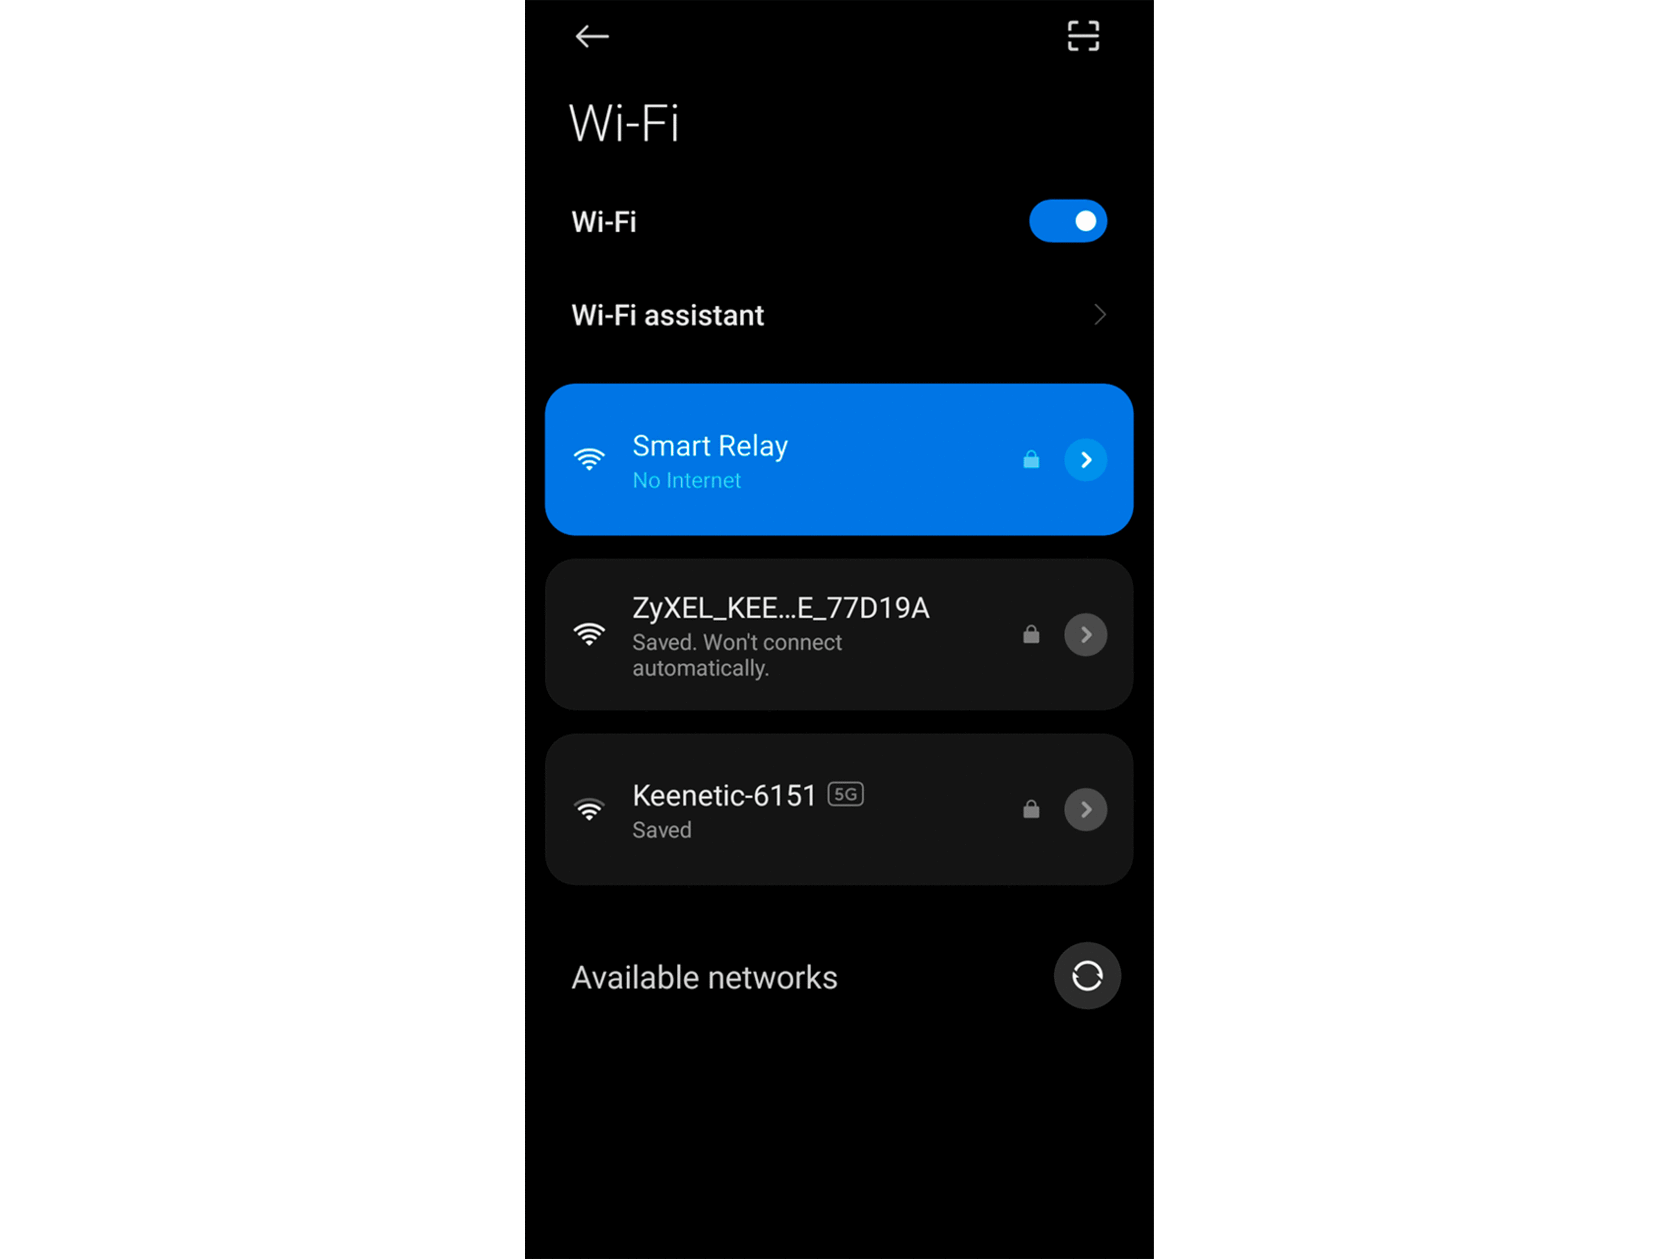 Wi-Fi settings on a smartphone